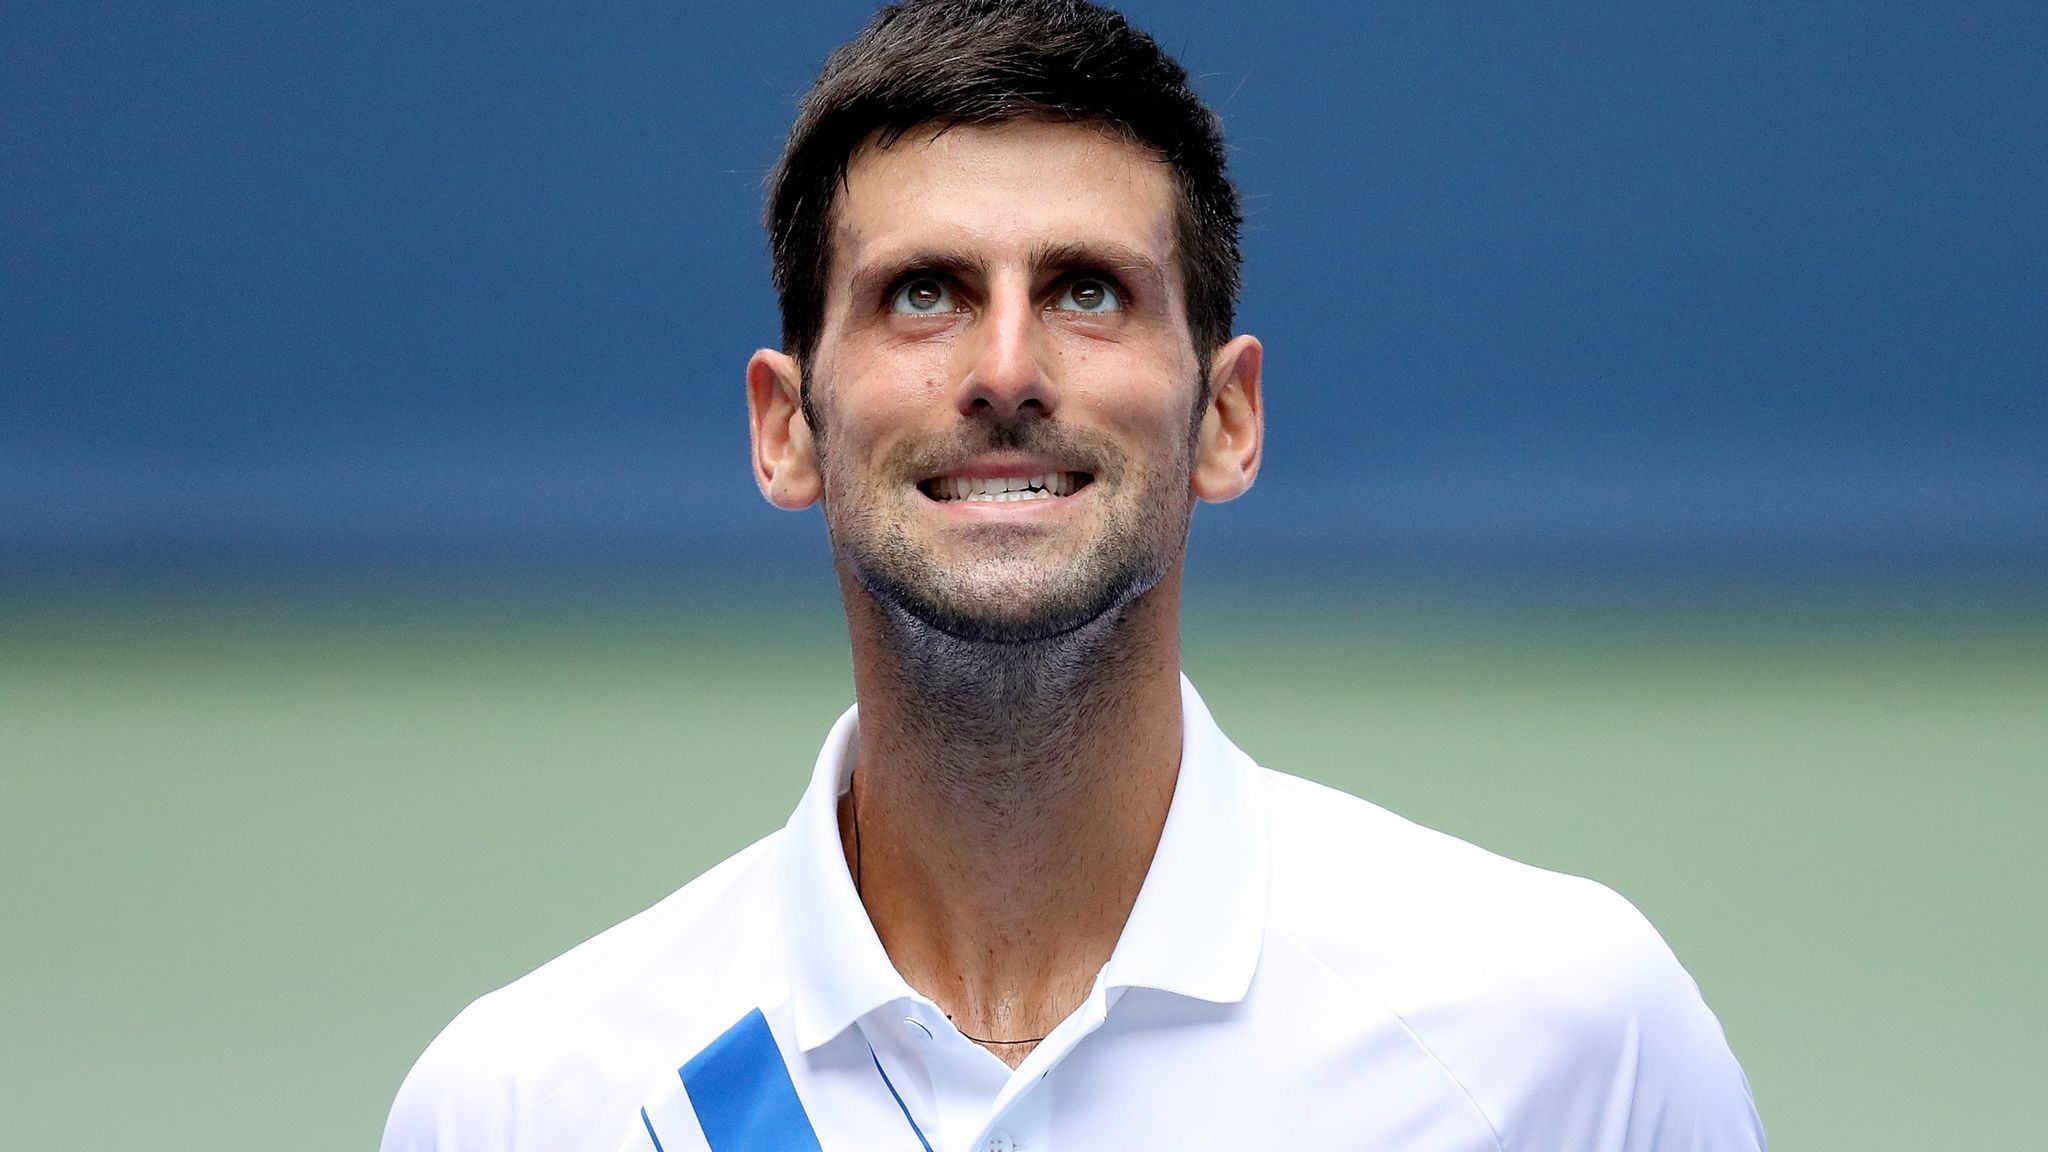 Сербский теннисист Джокович официально объявил, что пропустит US Open